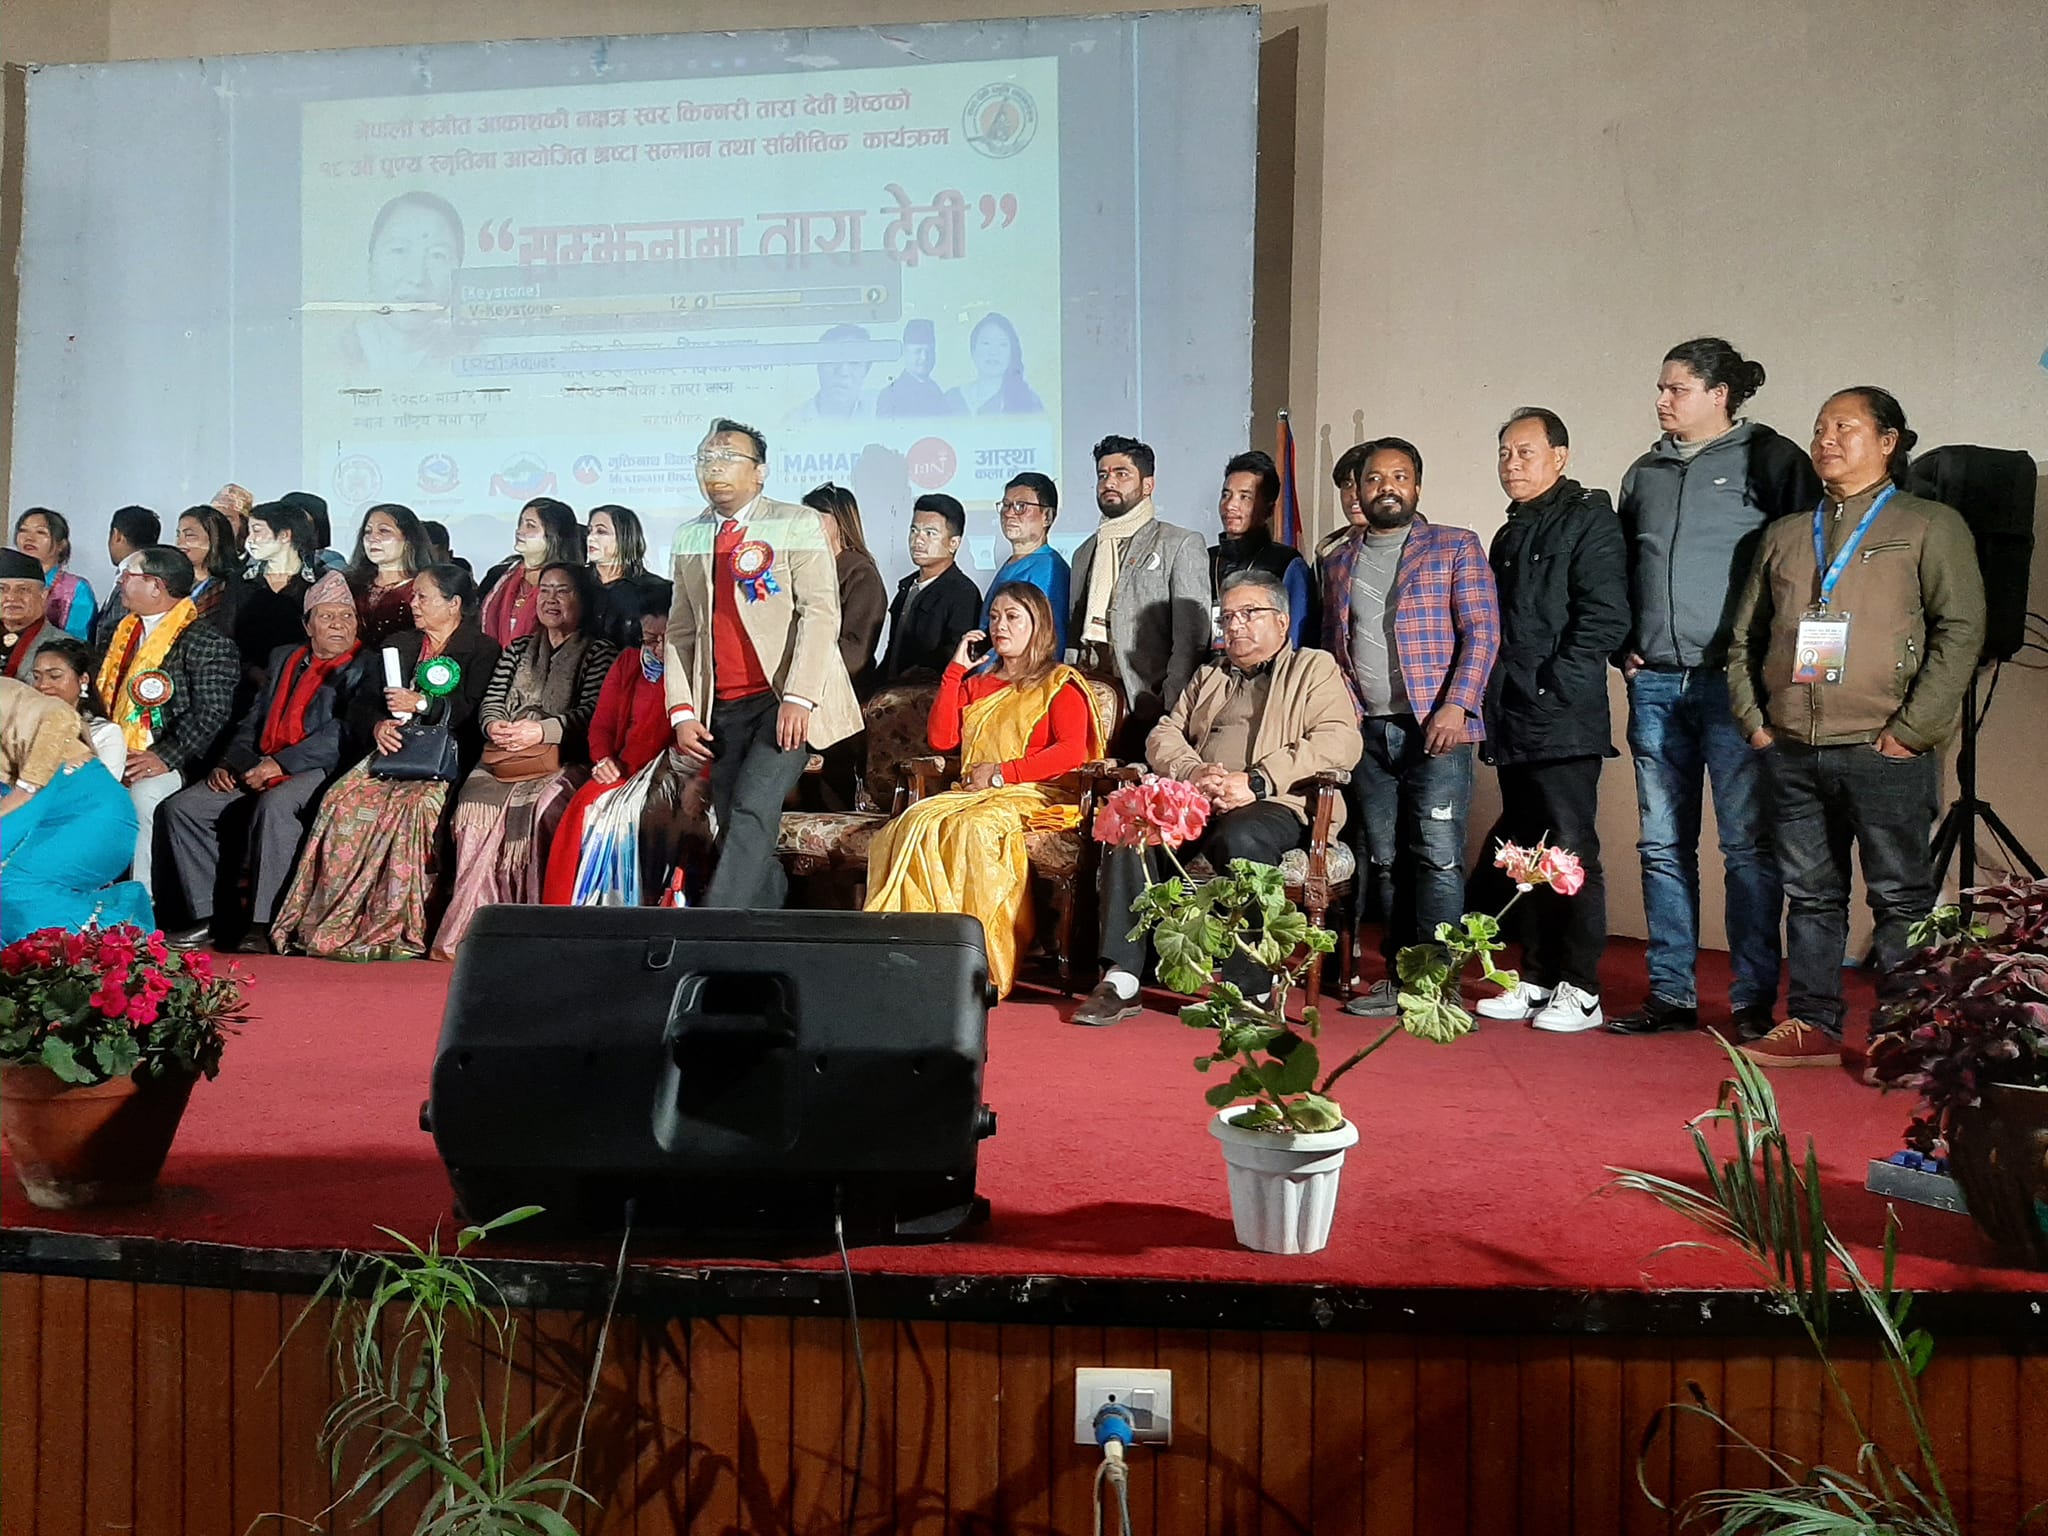 A Grateful Moment: Mrdf Nepal Pays Tribute to Tara Debi Shrestha on 18th Memorial Anniversary